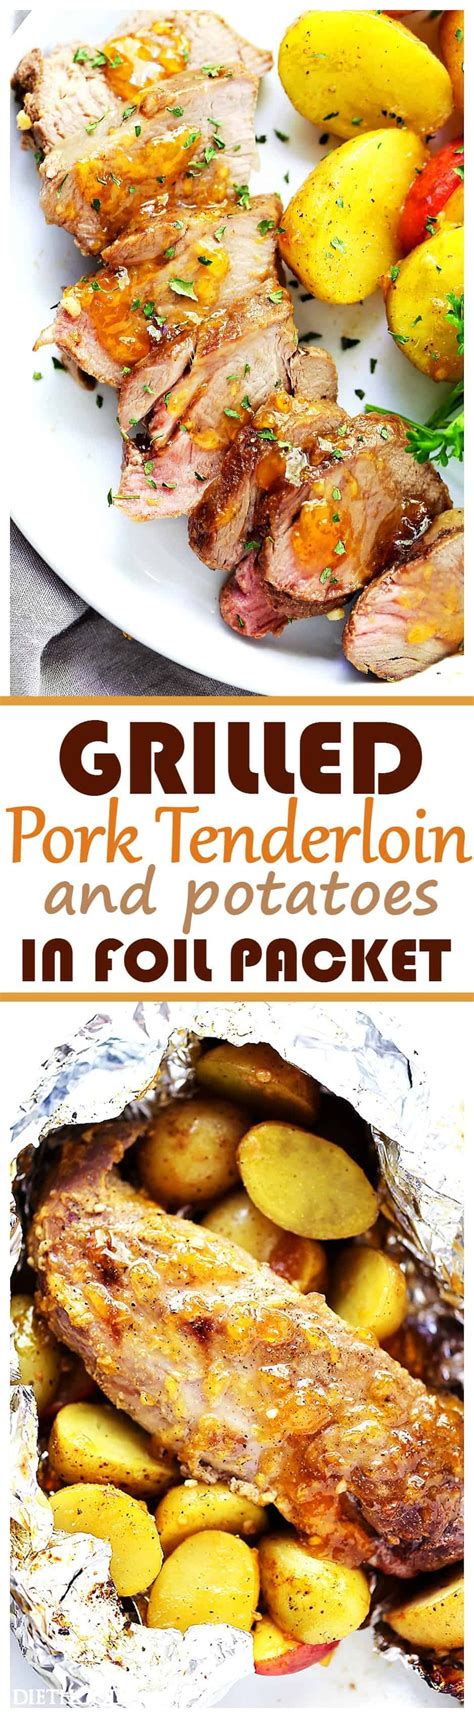 1 medium pork tenderloin roast, or 2 small. Grilled Peach-Glazed Pork Tenderloin Foil Packet with Potatoes - Glazed with peach preserves and ...